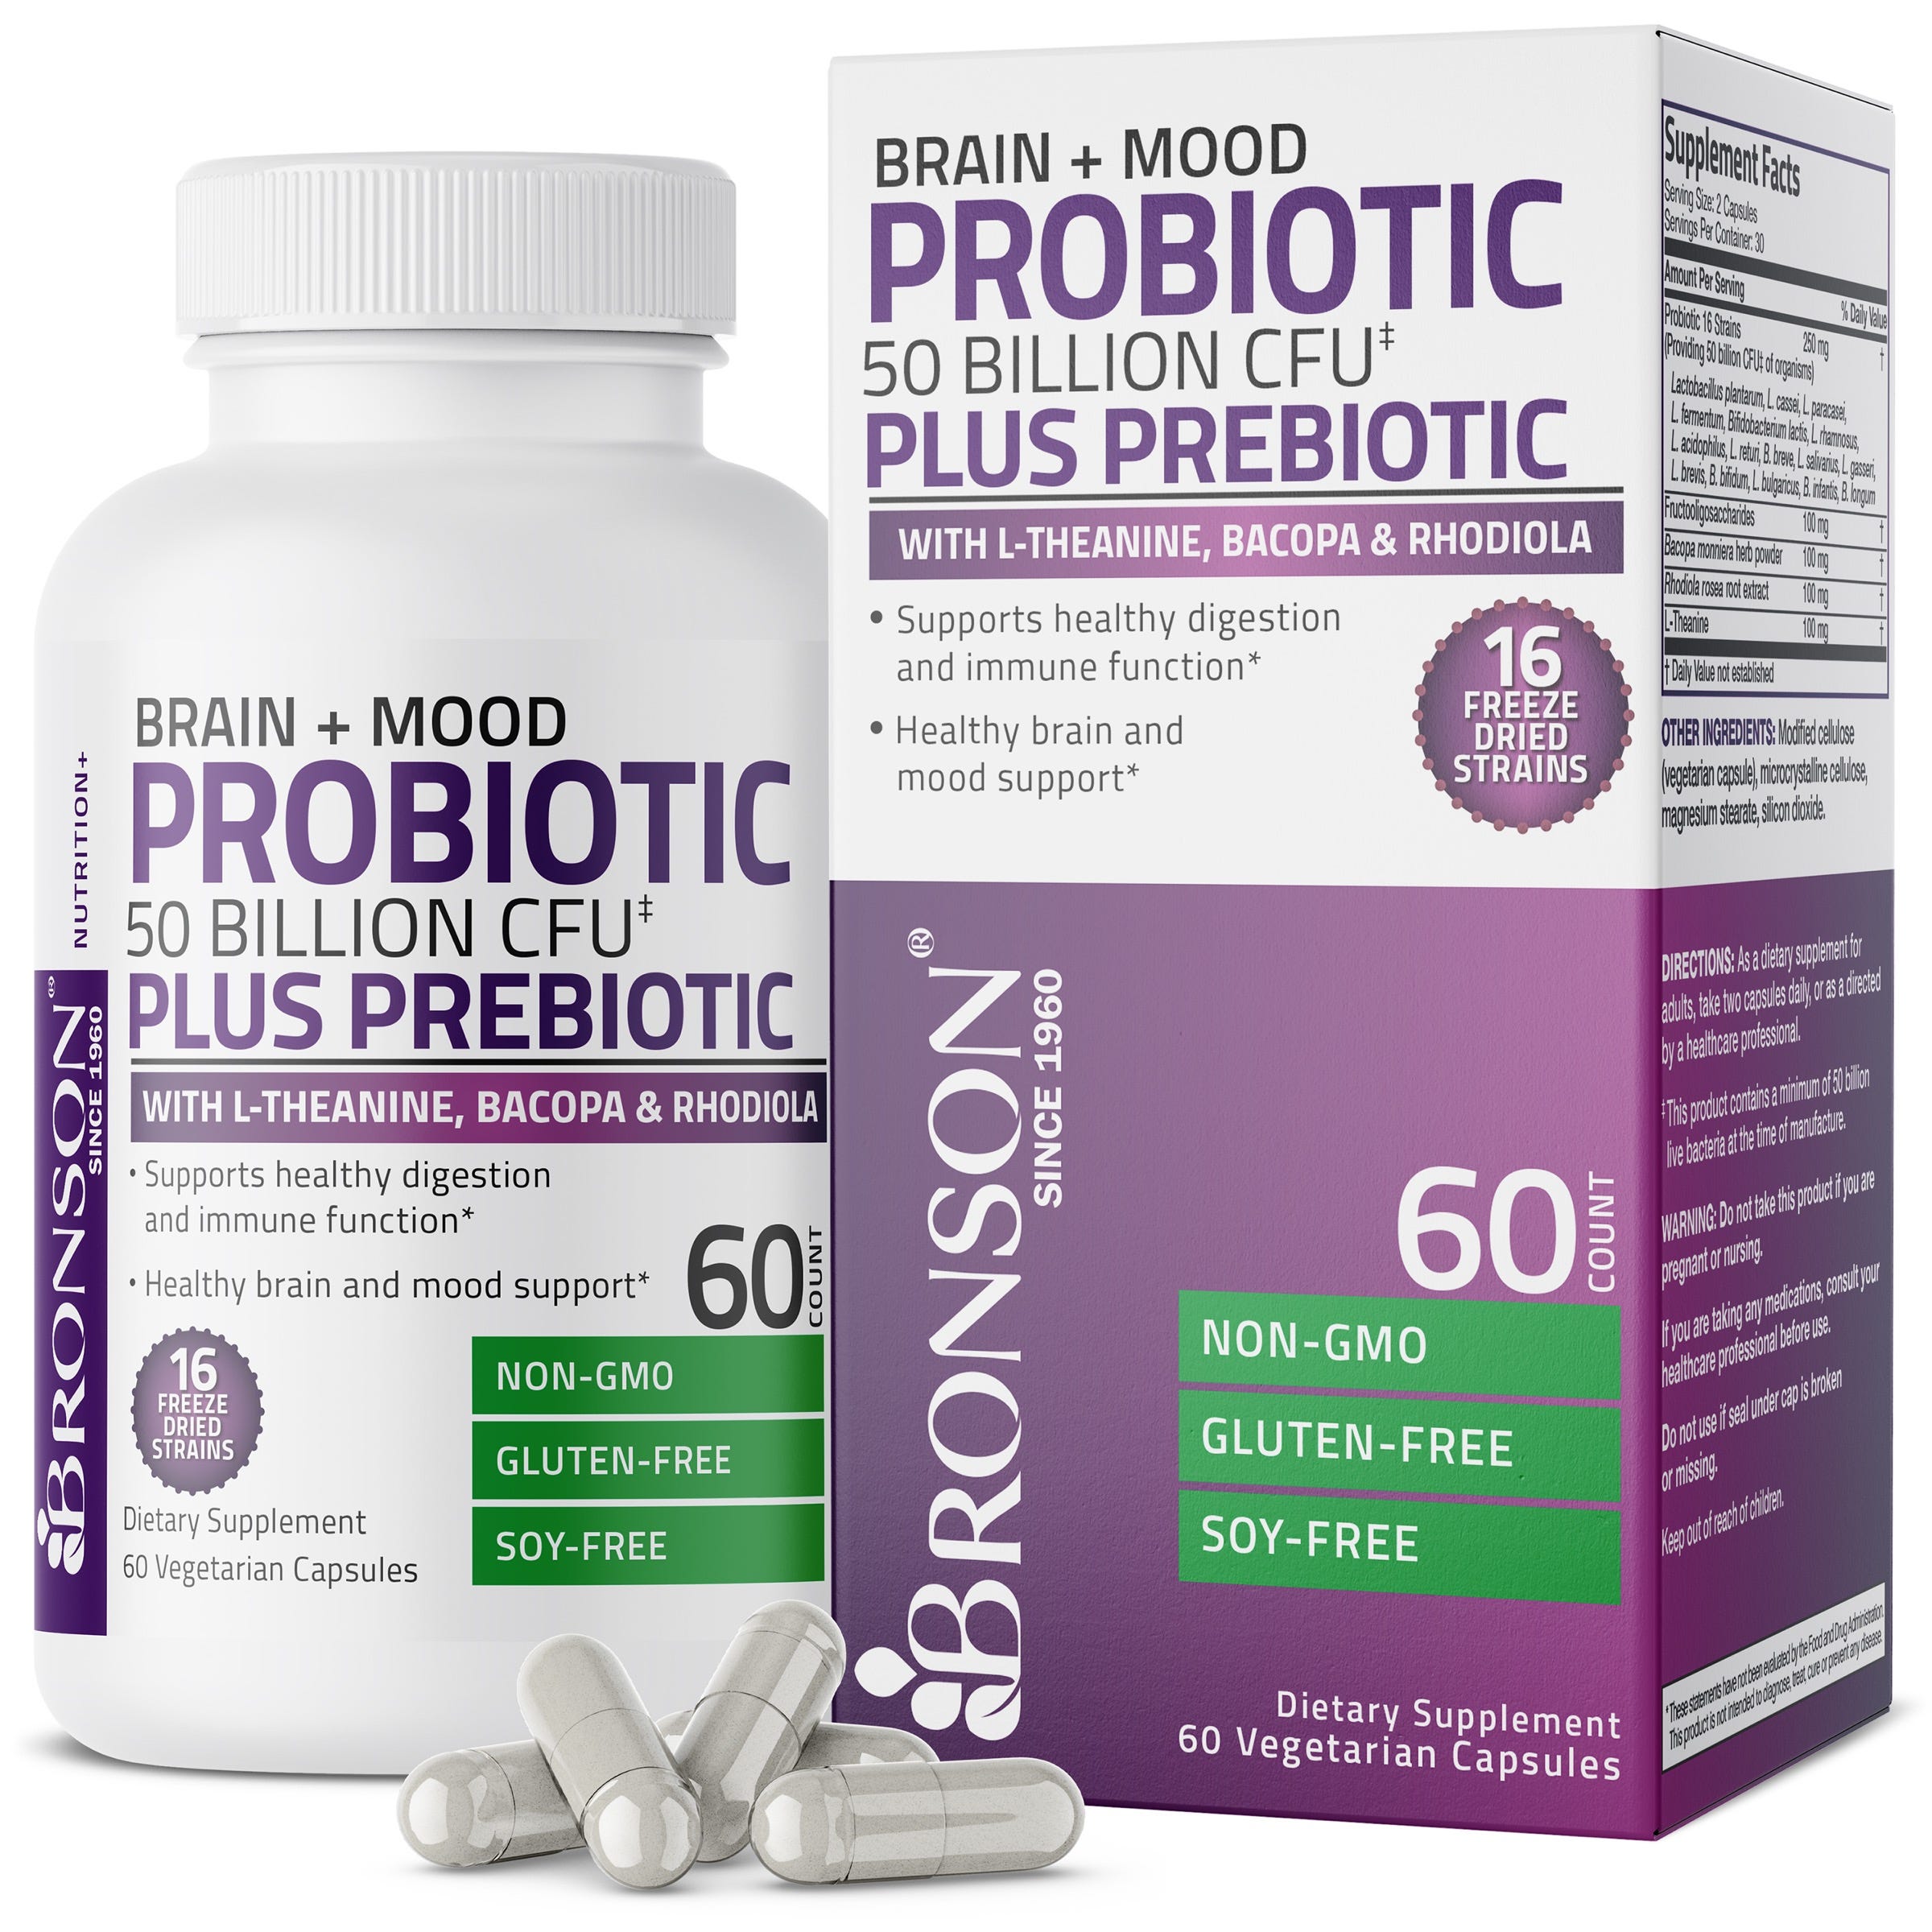 Probiotic Plus Prebiotic with L-Theanine, Bacopa & Rhodiola - 50 Billion CFU - 60 Vegetarian Capsules view 1 of 7